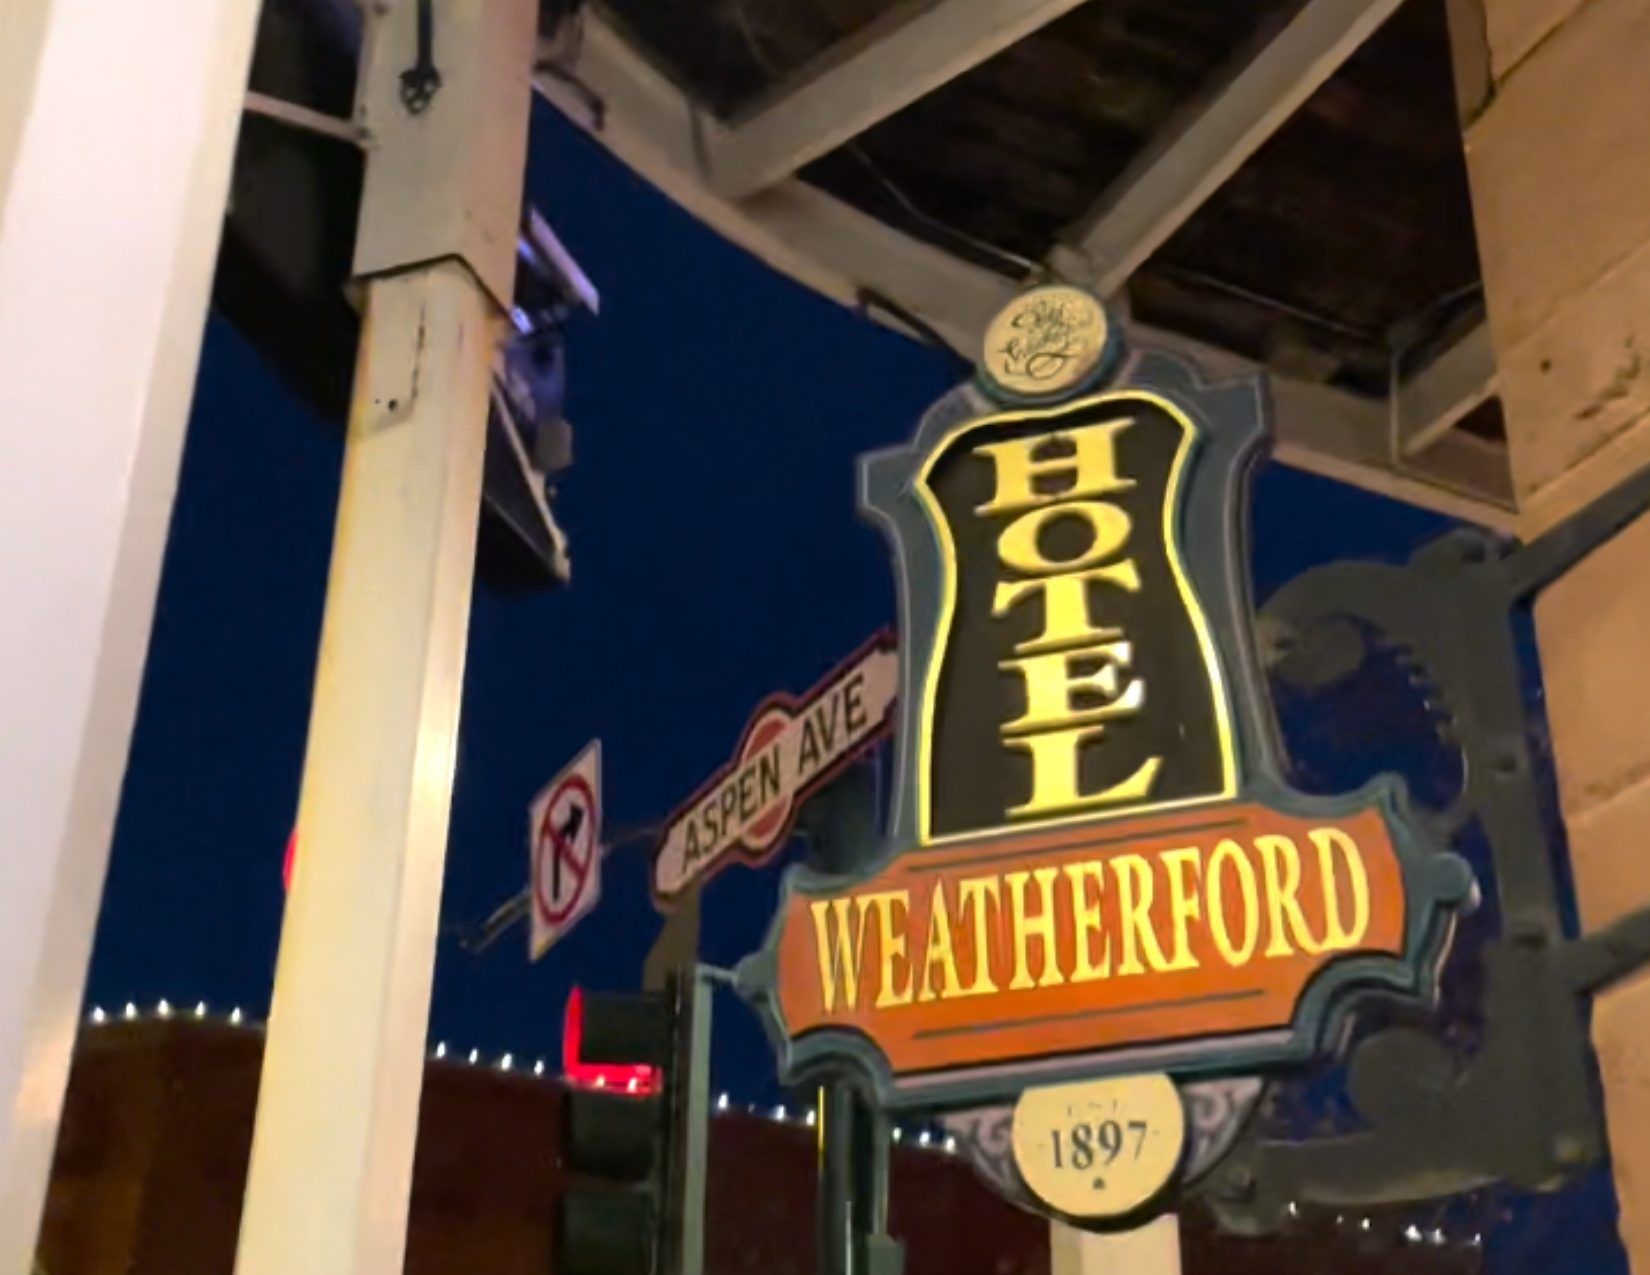 Sign of Hotel Weatherford in Flagstaff Arizona